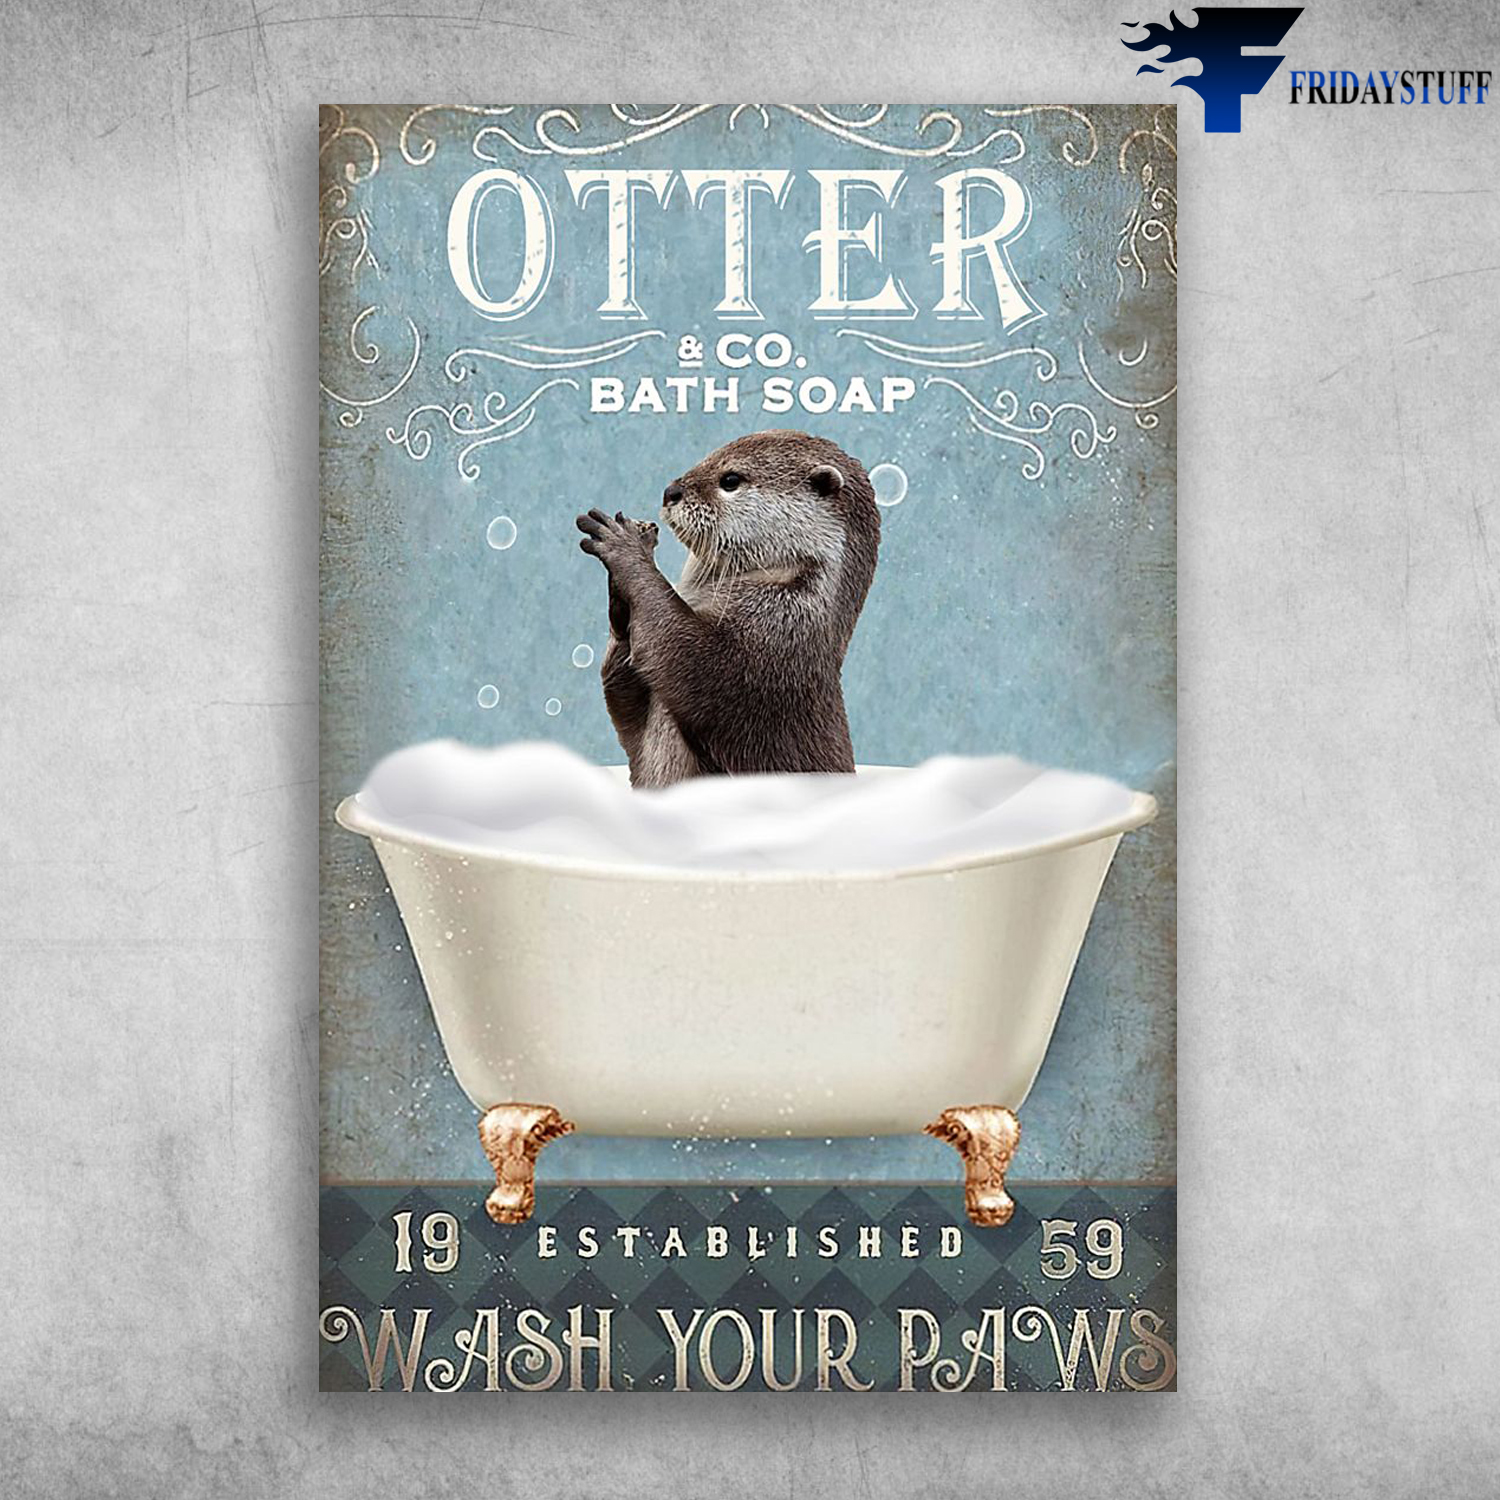 Otter Bath Soap 19 Established 59 Wash Your Paws